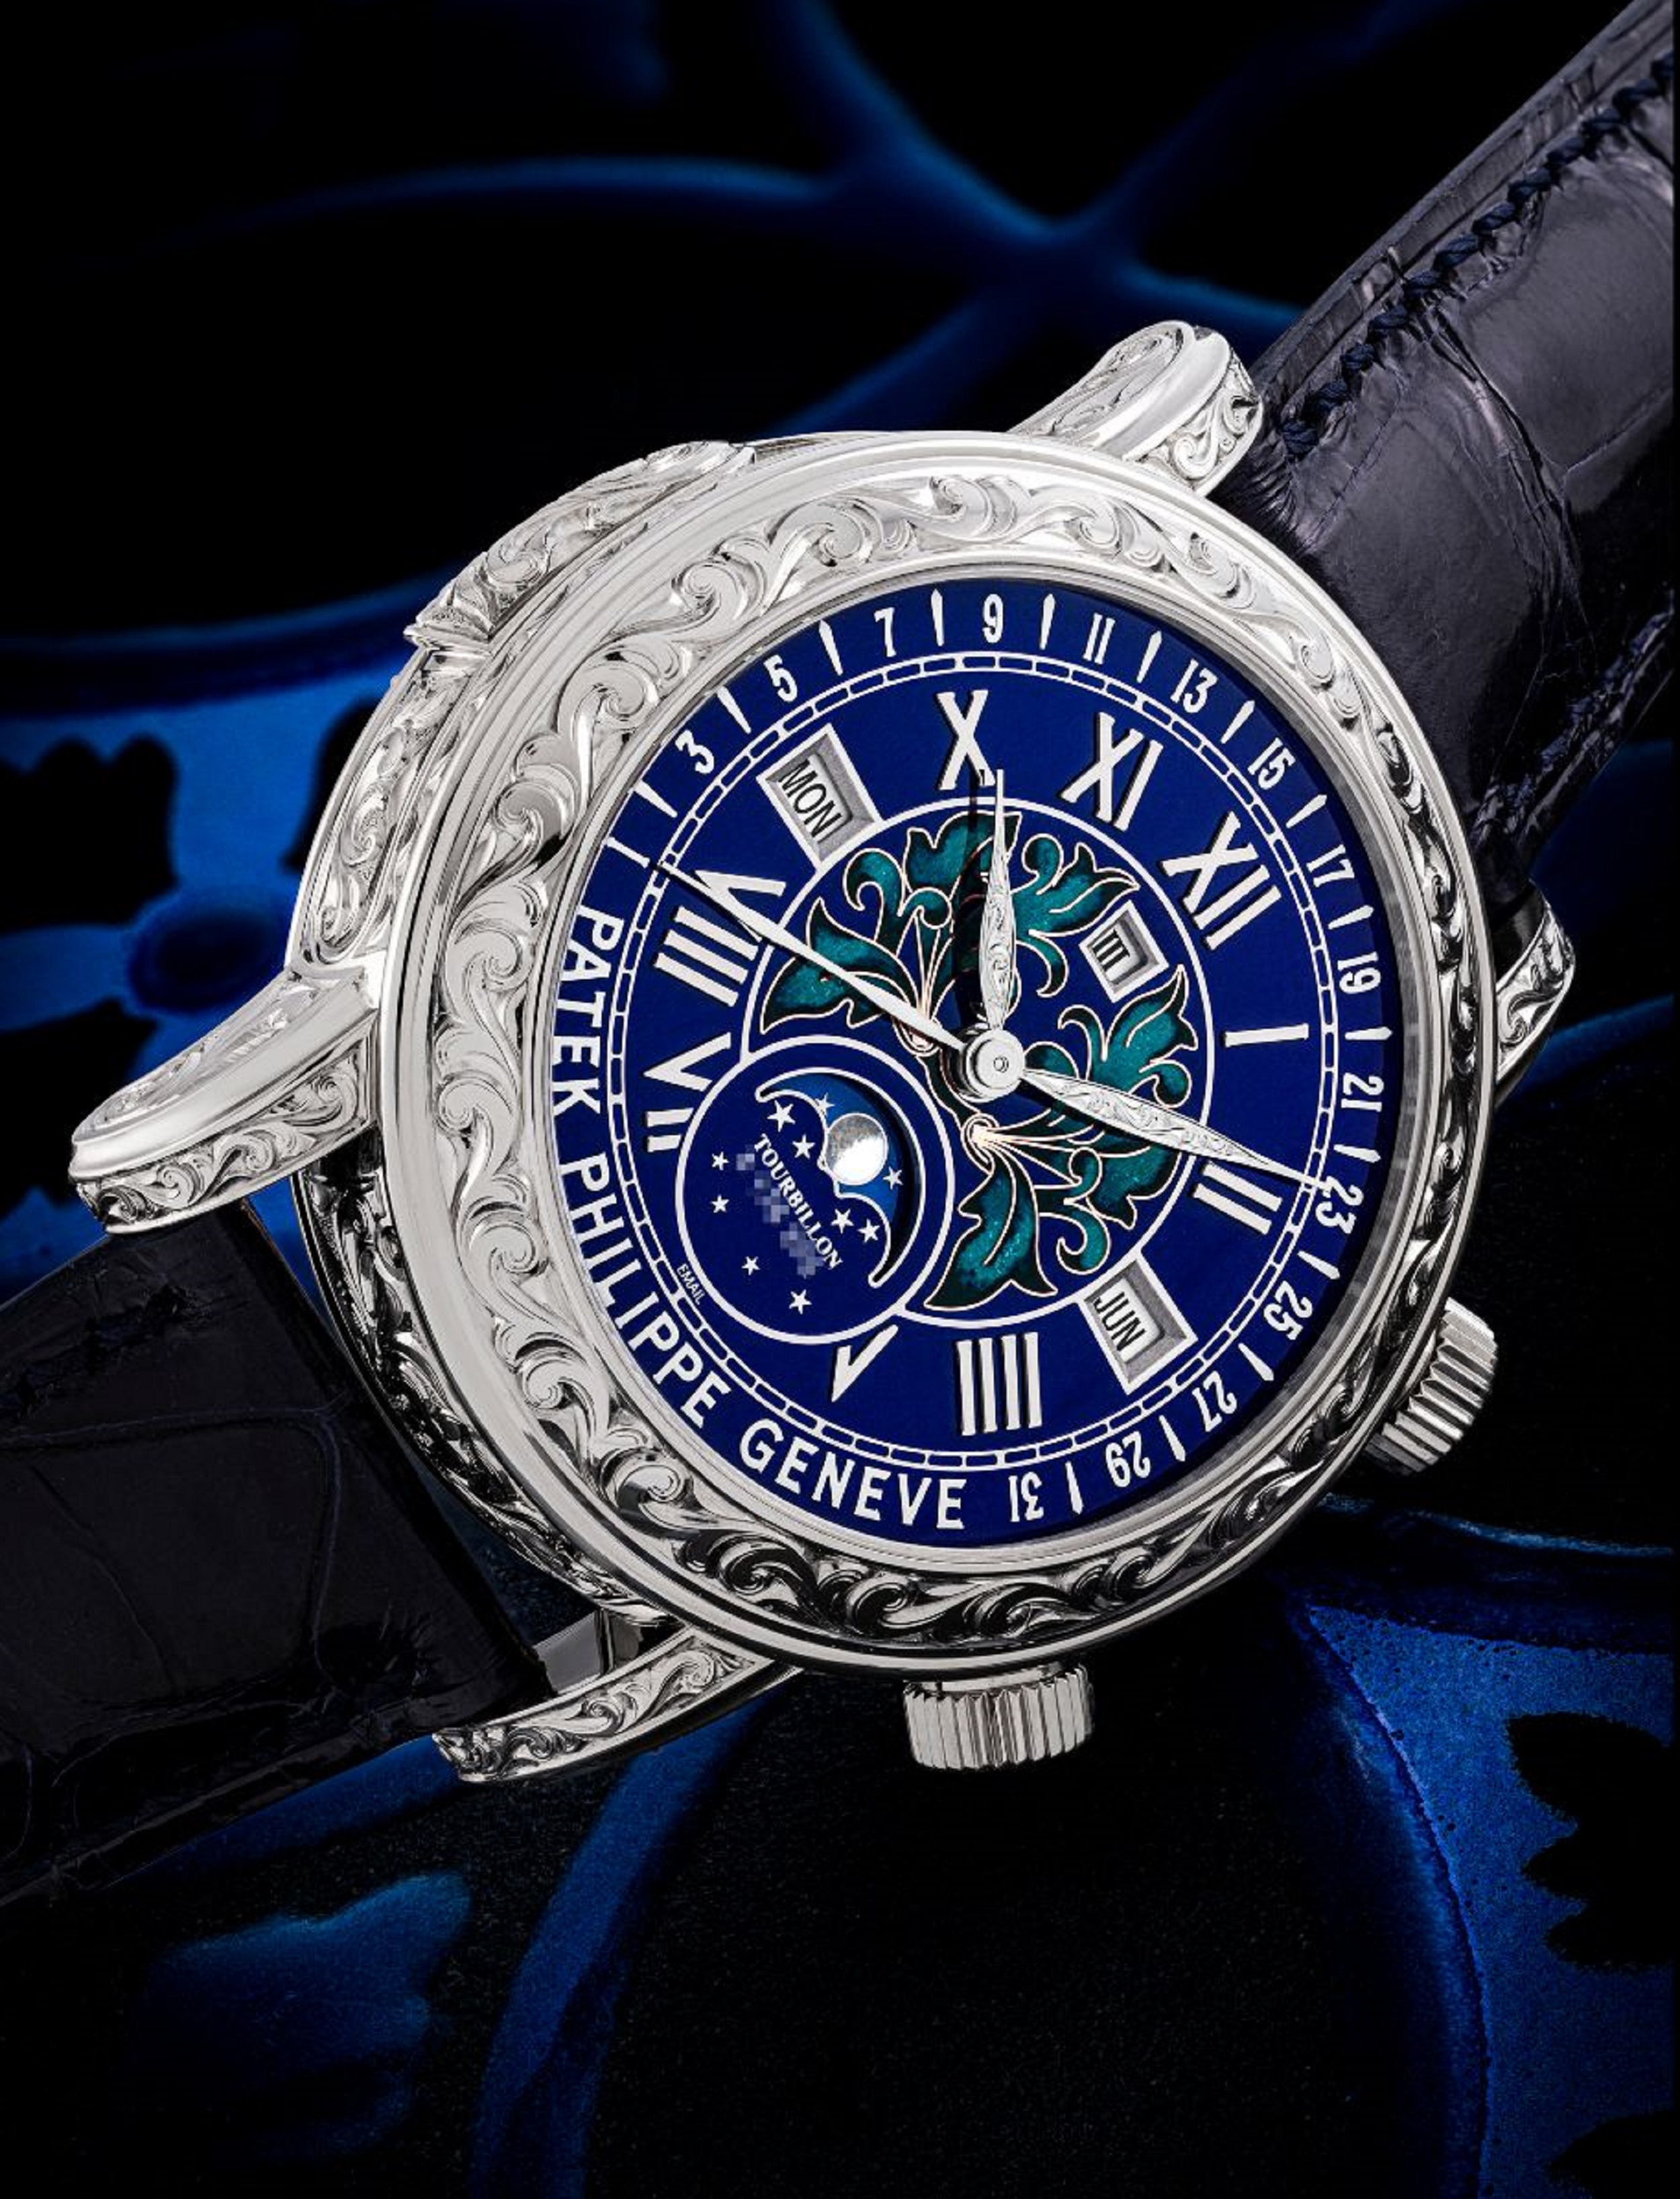 Online auction: record sale for a Patek Philippe watch - Luxury Tribune